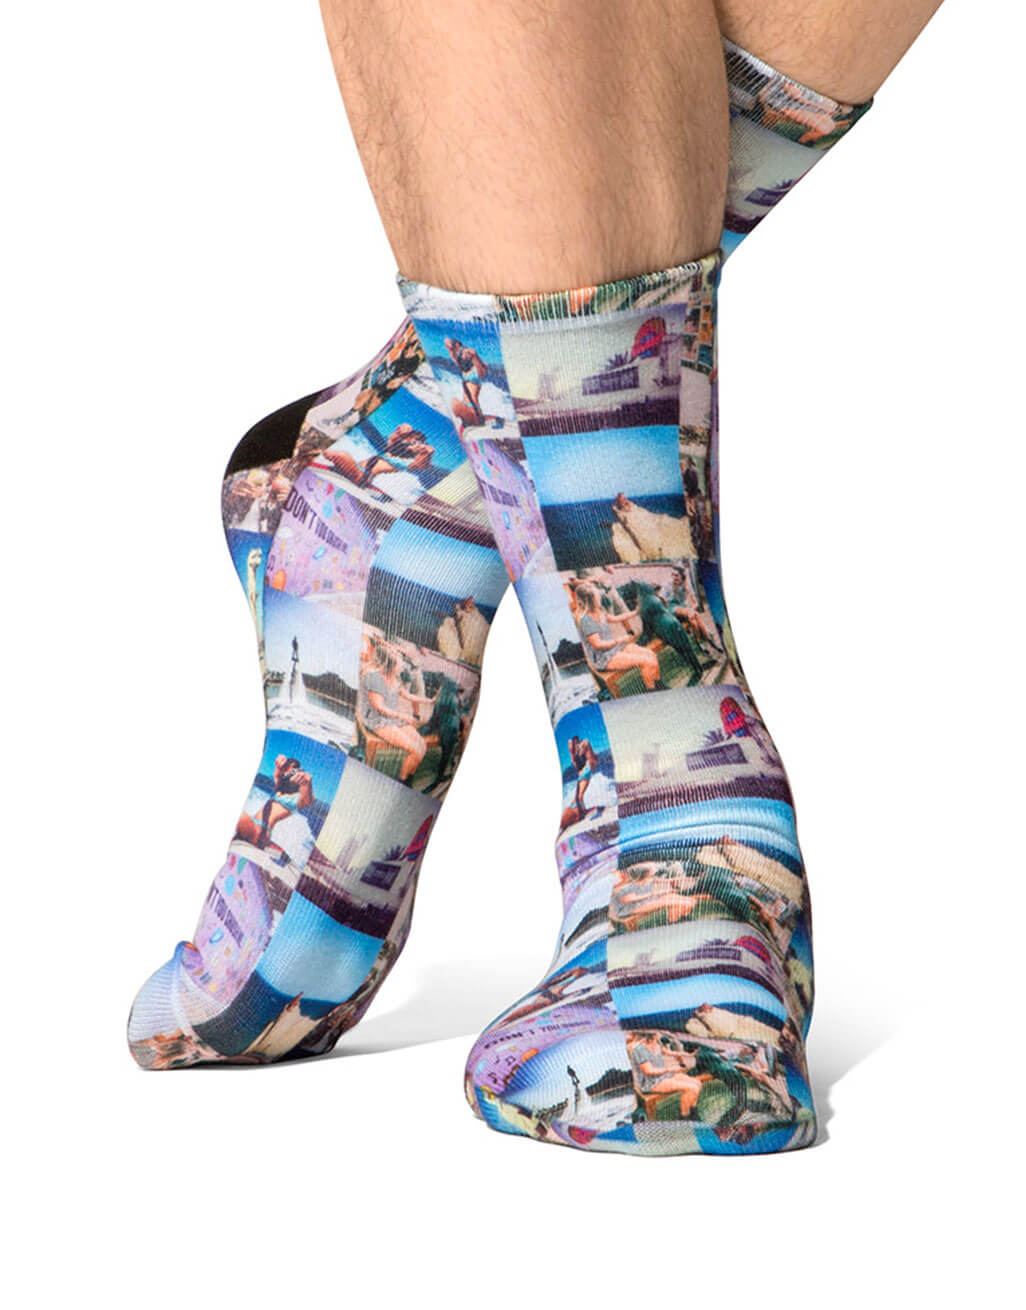 Photo Collage Custom Socks